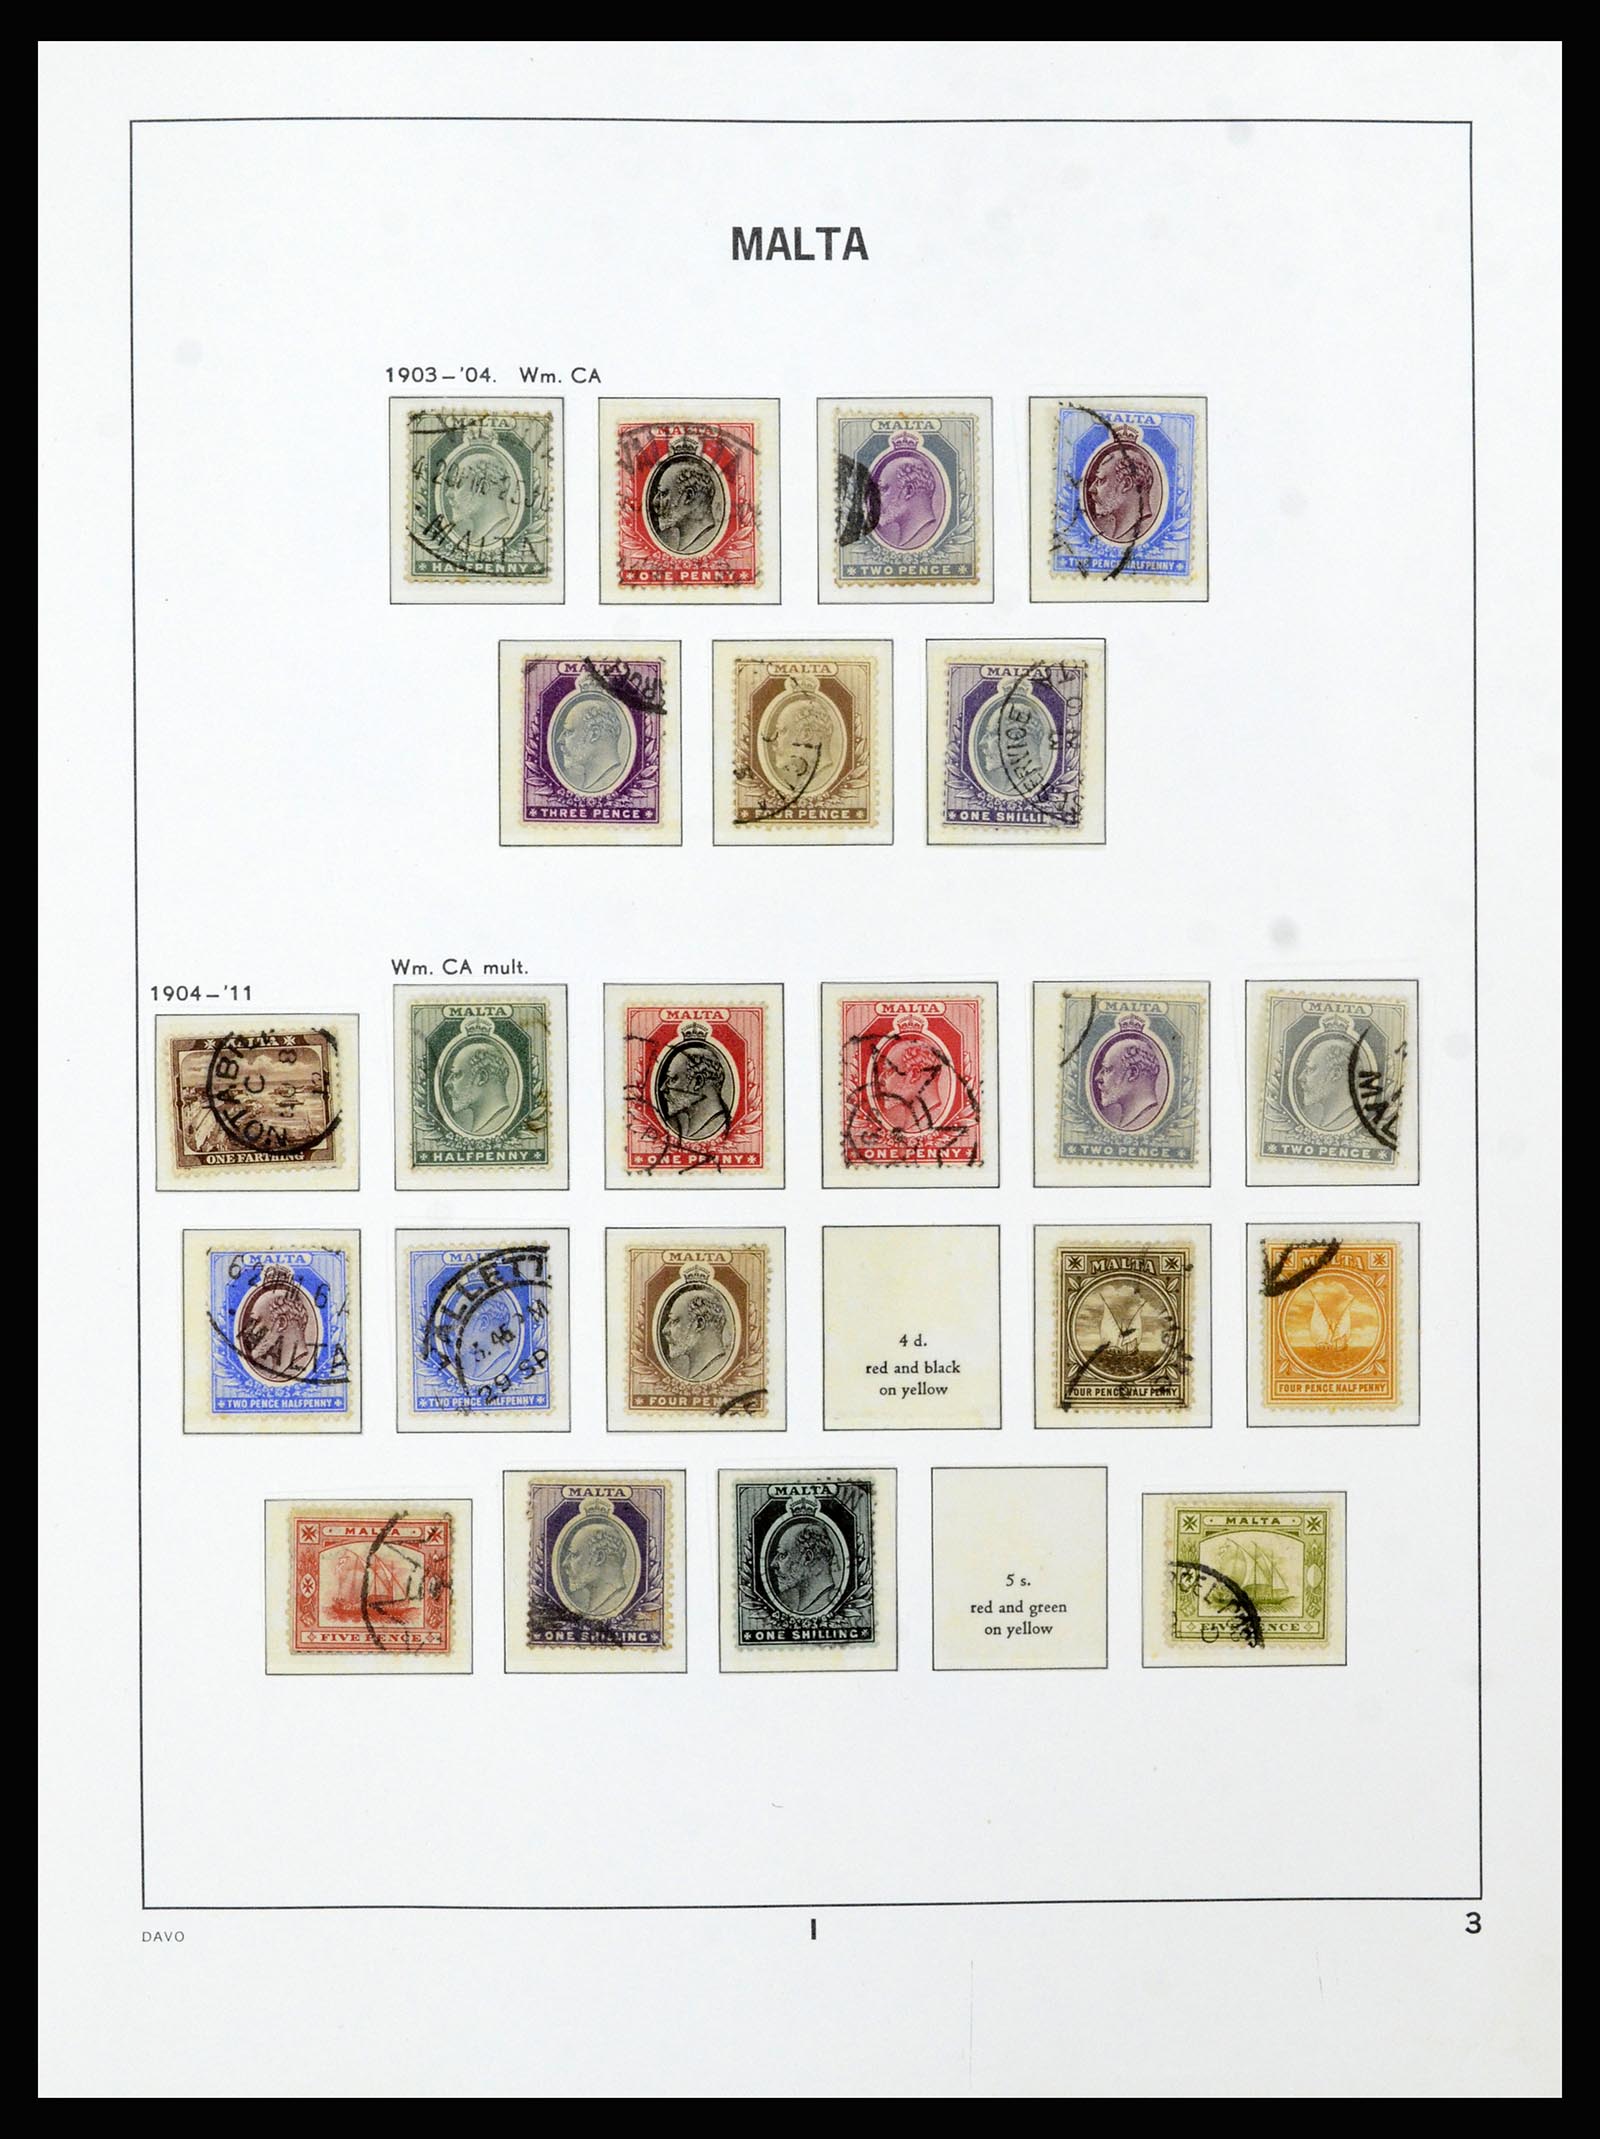 37212 003 - Stamp collection 37212 Malta 1863-1989.